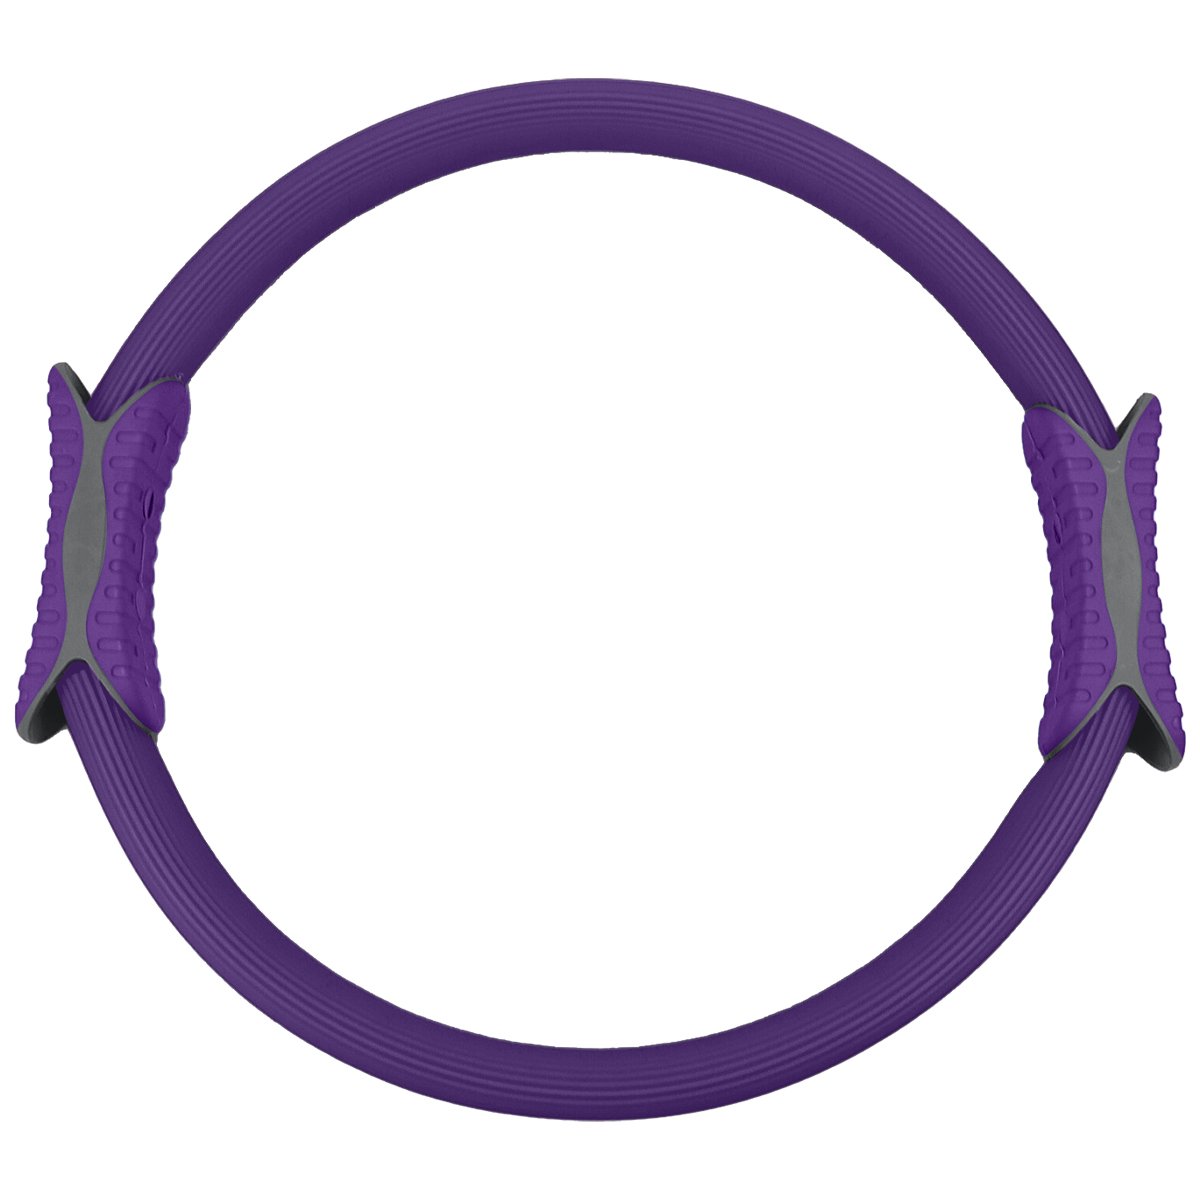 Powertrain Pilates Ring Band Yoga Home Workout Exercise Band Purple